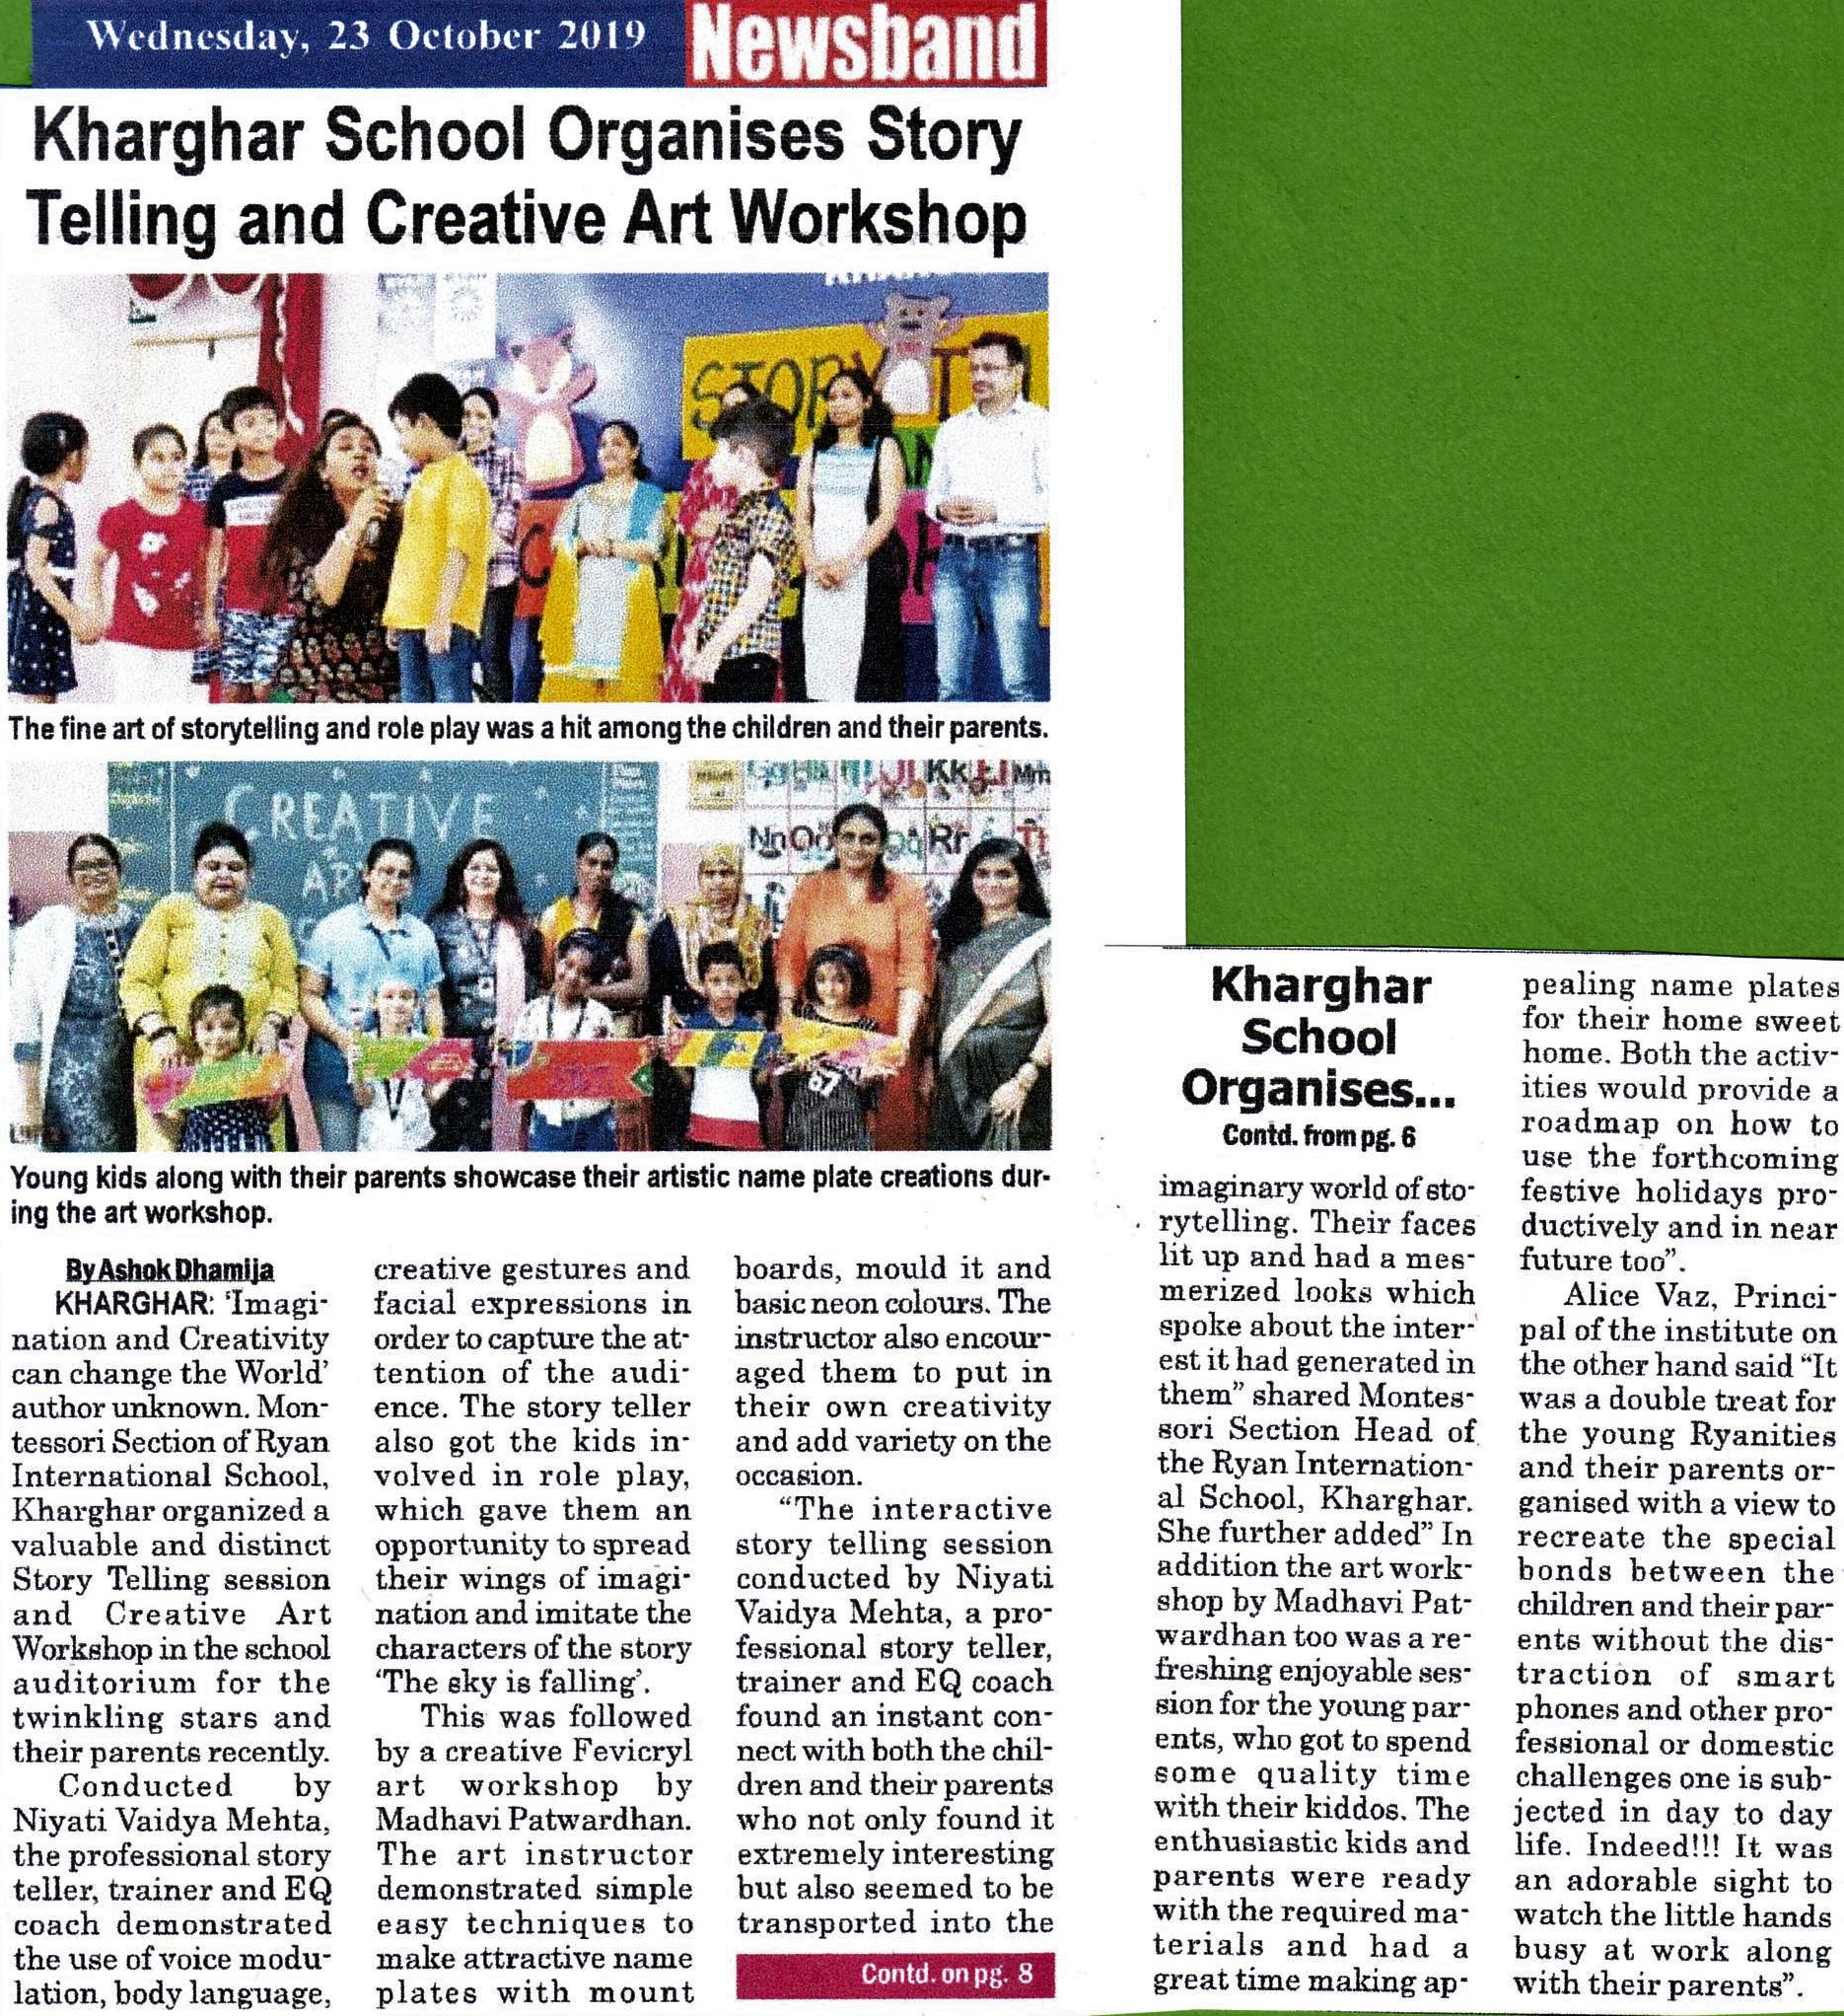 Kharghar School Organises Storytelling and Creative Art Workshop was mentioned in Newsband - Ryan International School, Kharghar